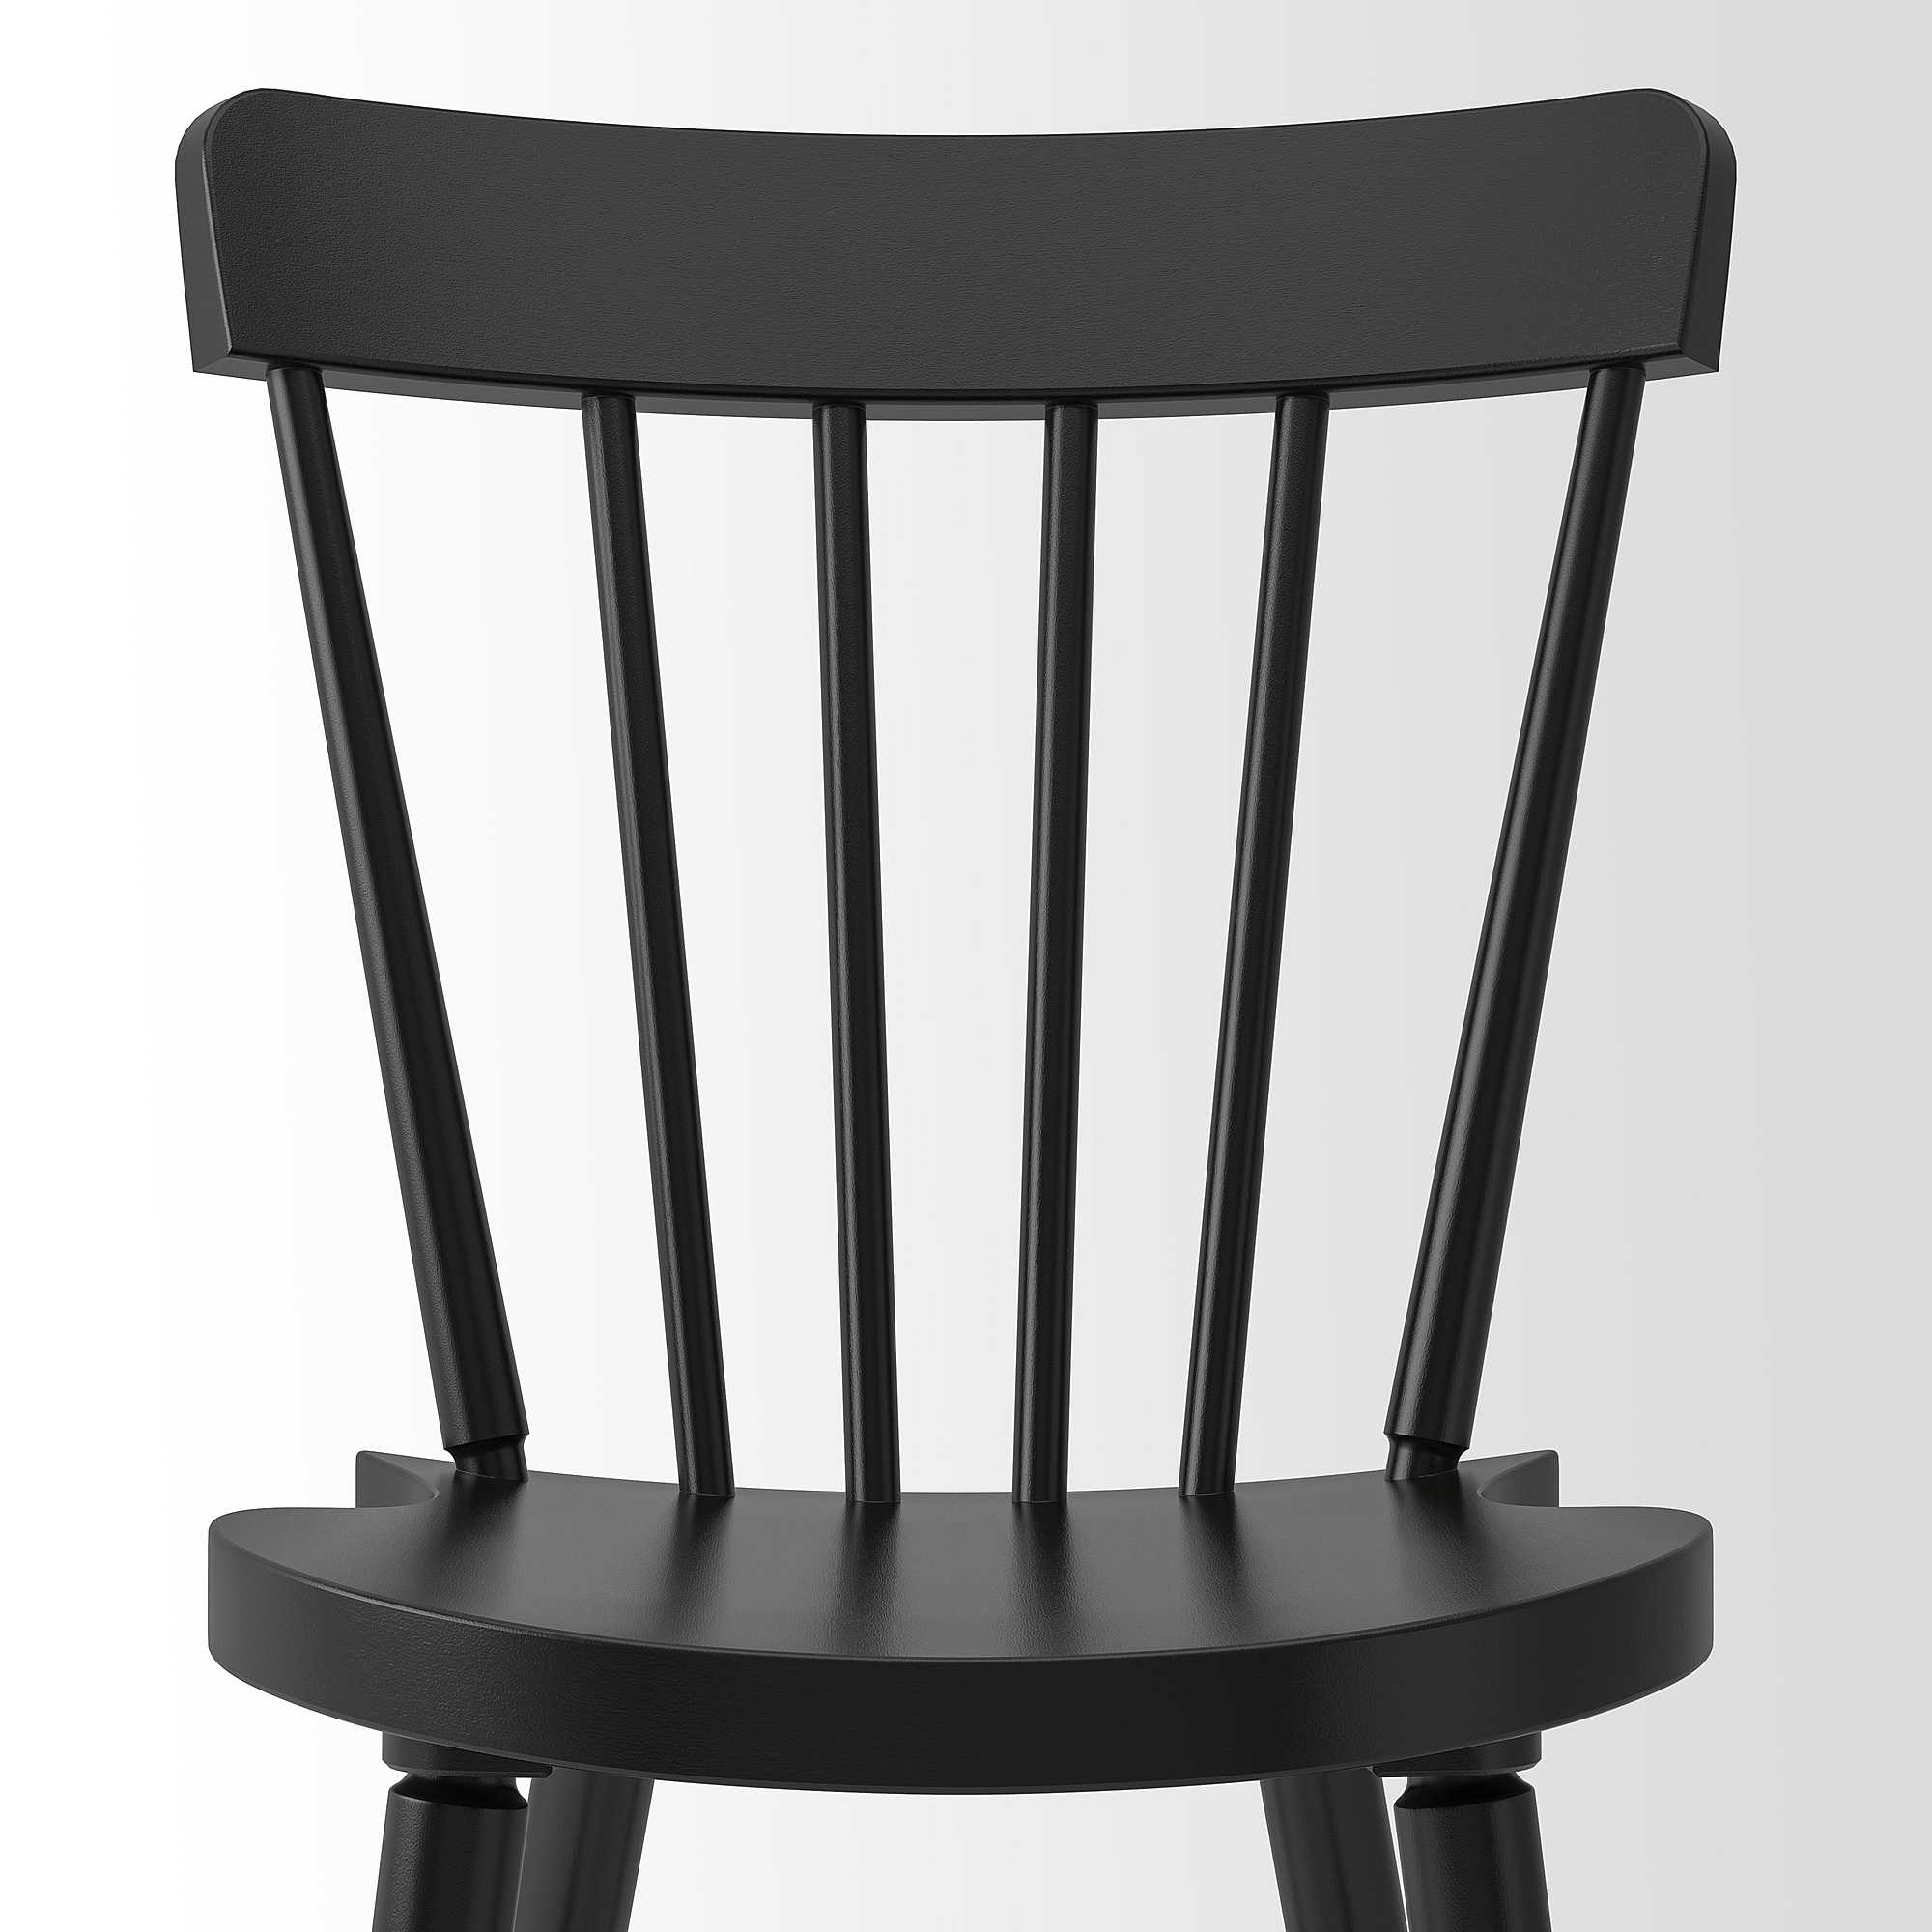 NORRARYD chair